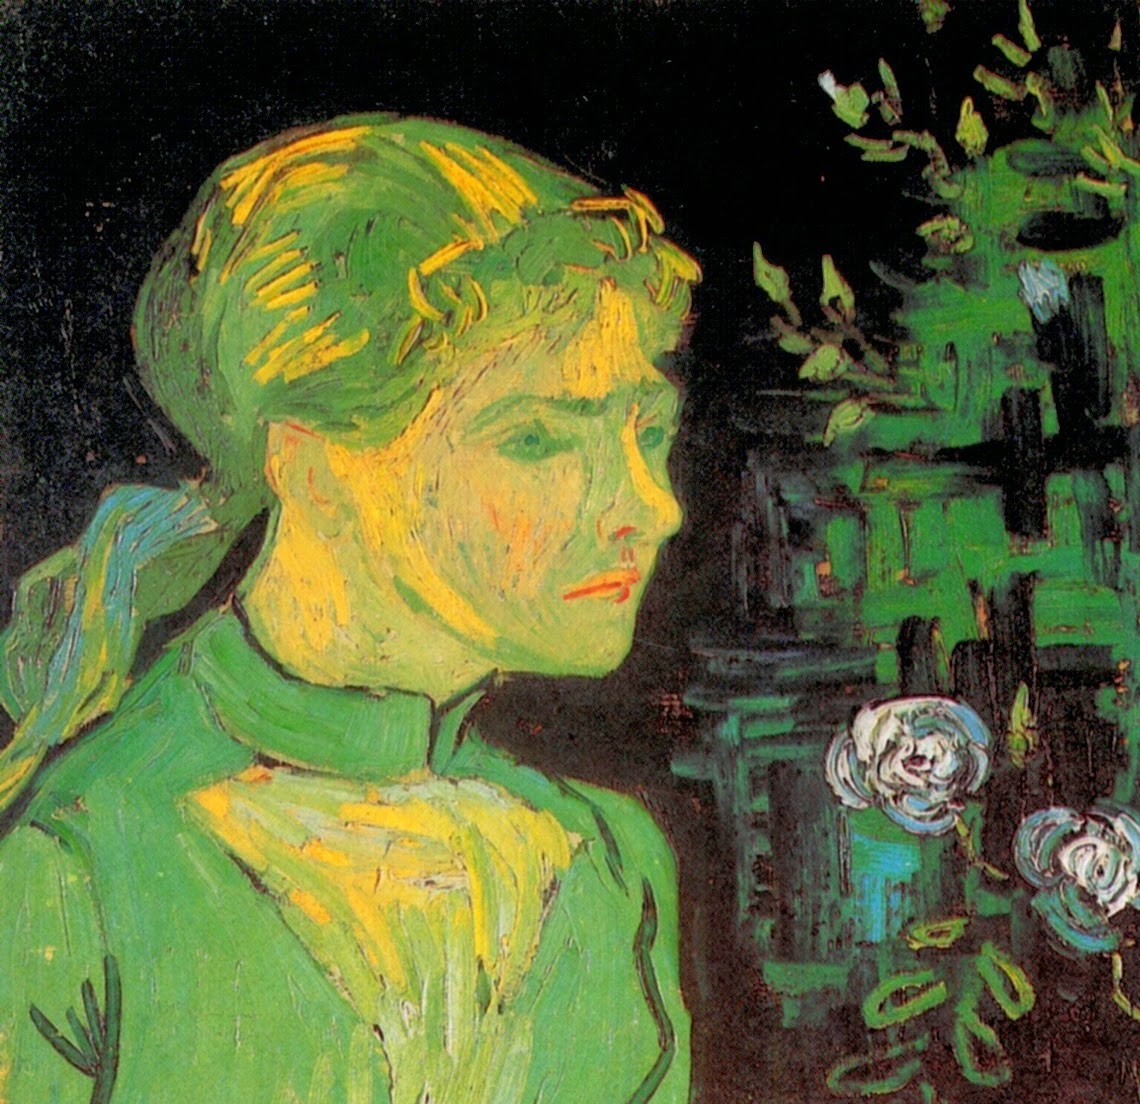 Vincent+Van+Gogh-1853-1890 (872).jpg